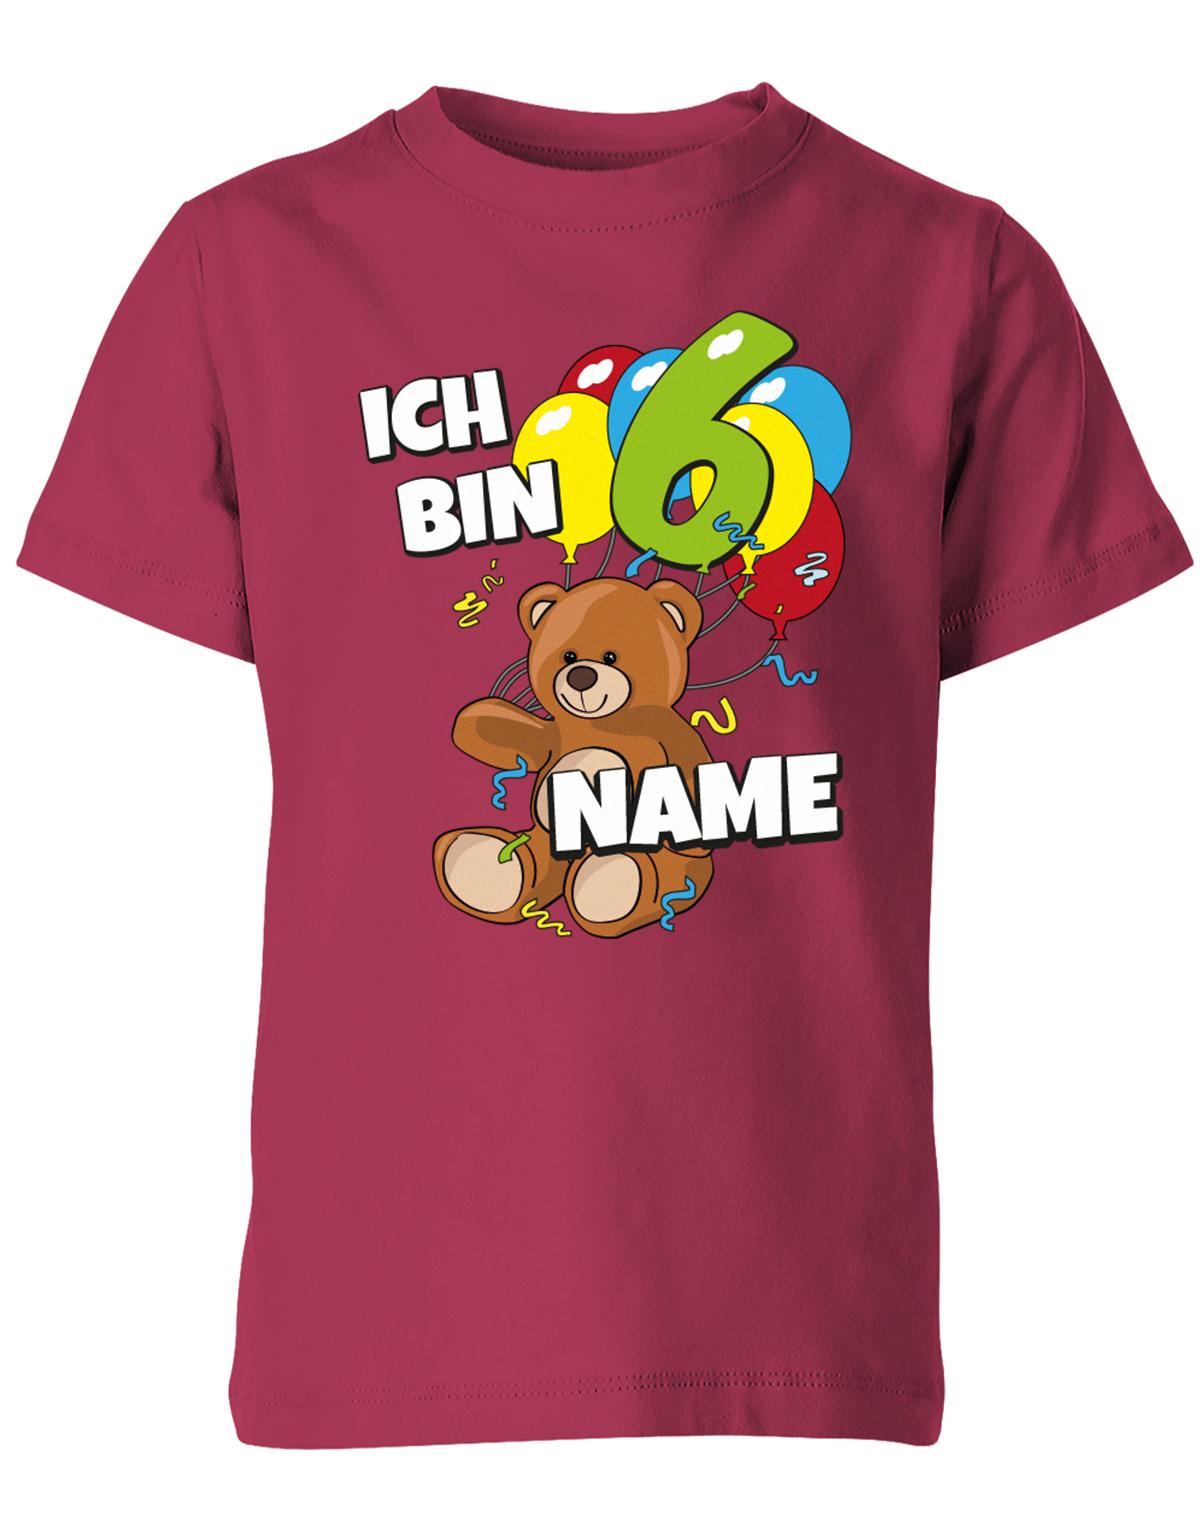 ich-bin-6-teddy-luftballons-kinder-shirt-sorbet